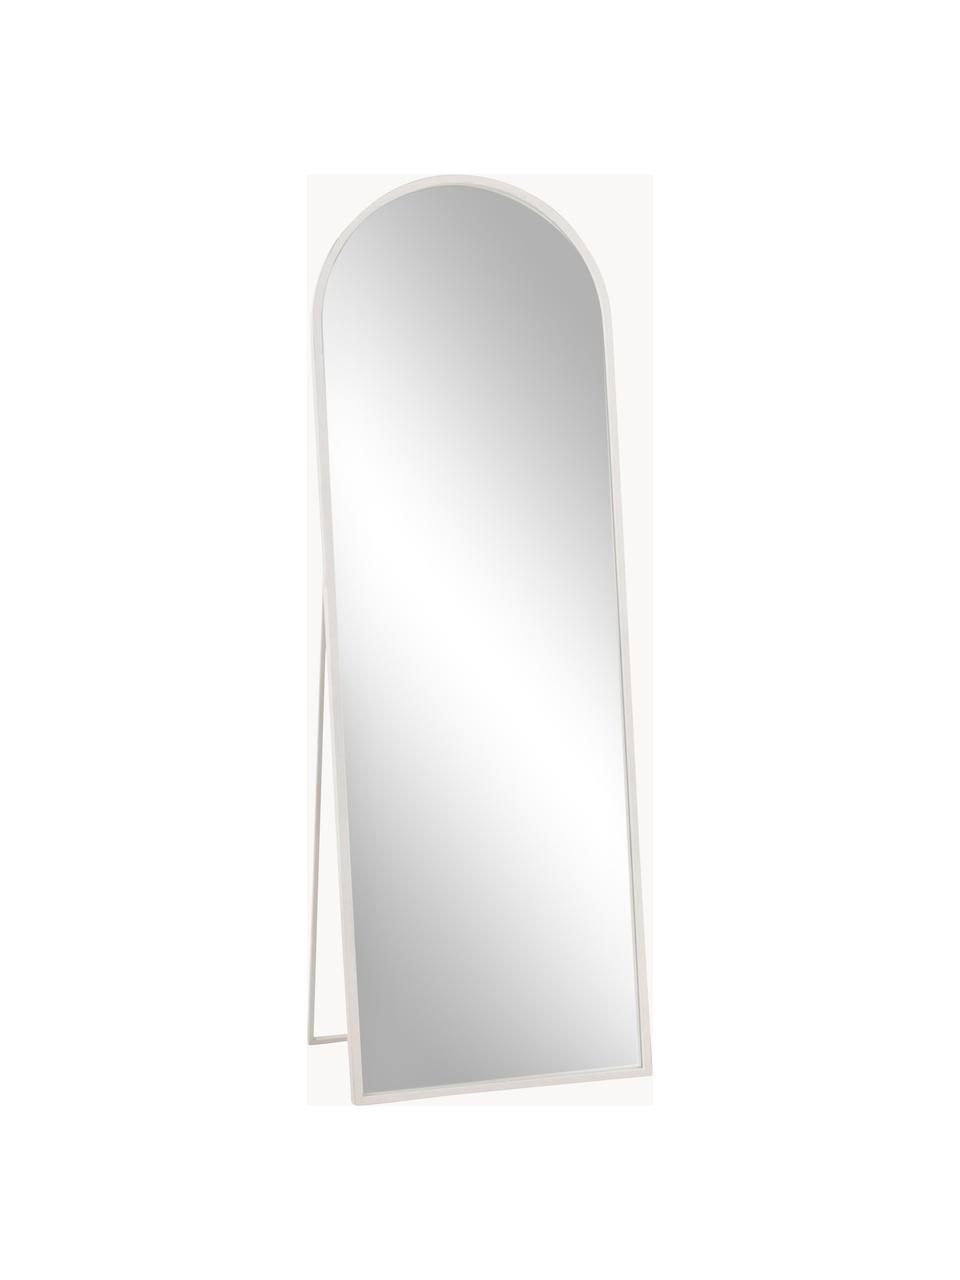 Miroir sur pied Espelho, Blanc, larg. 51 x haut. 148 cm